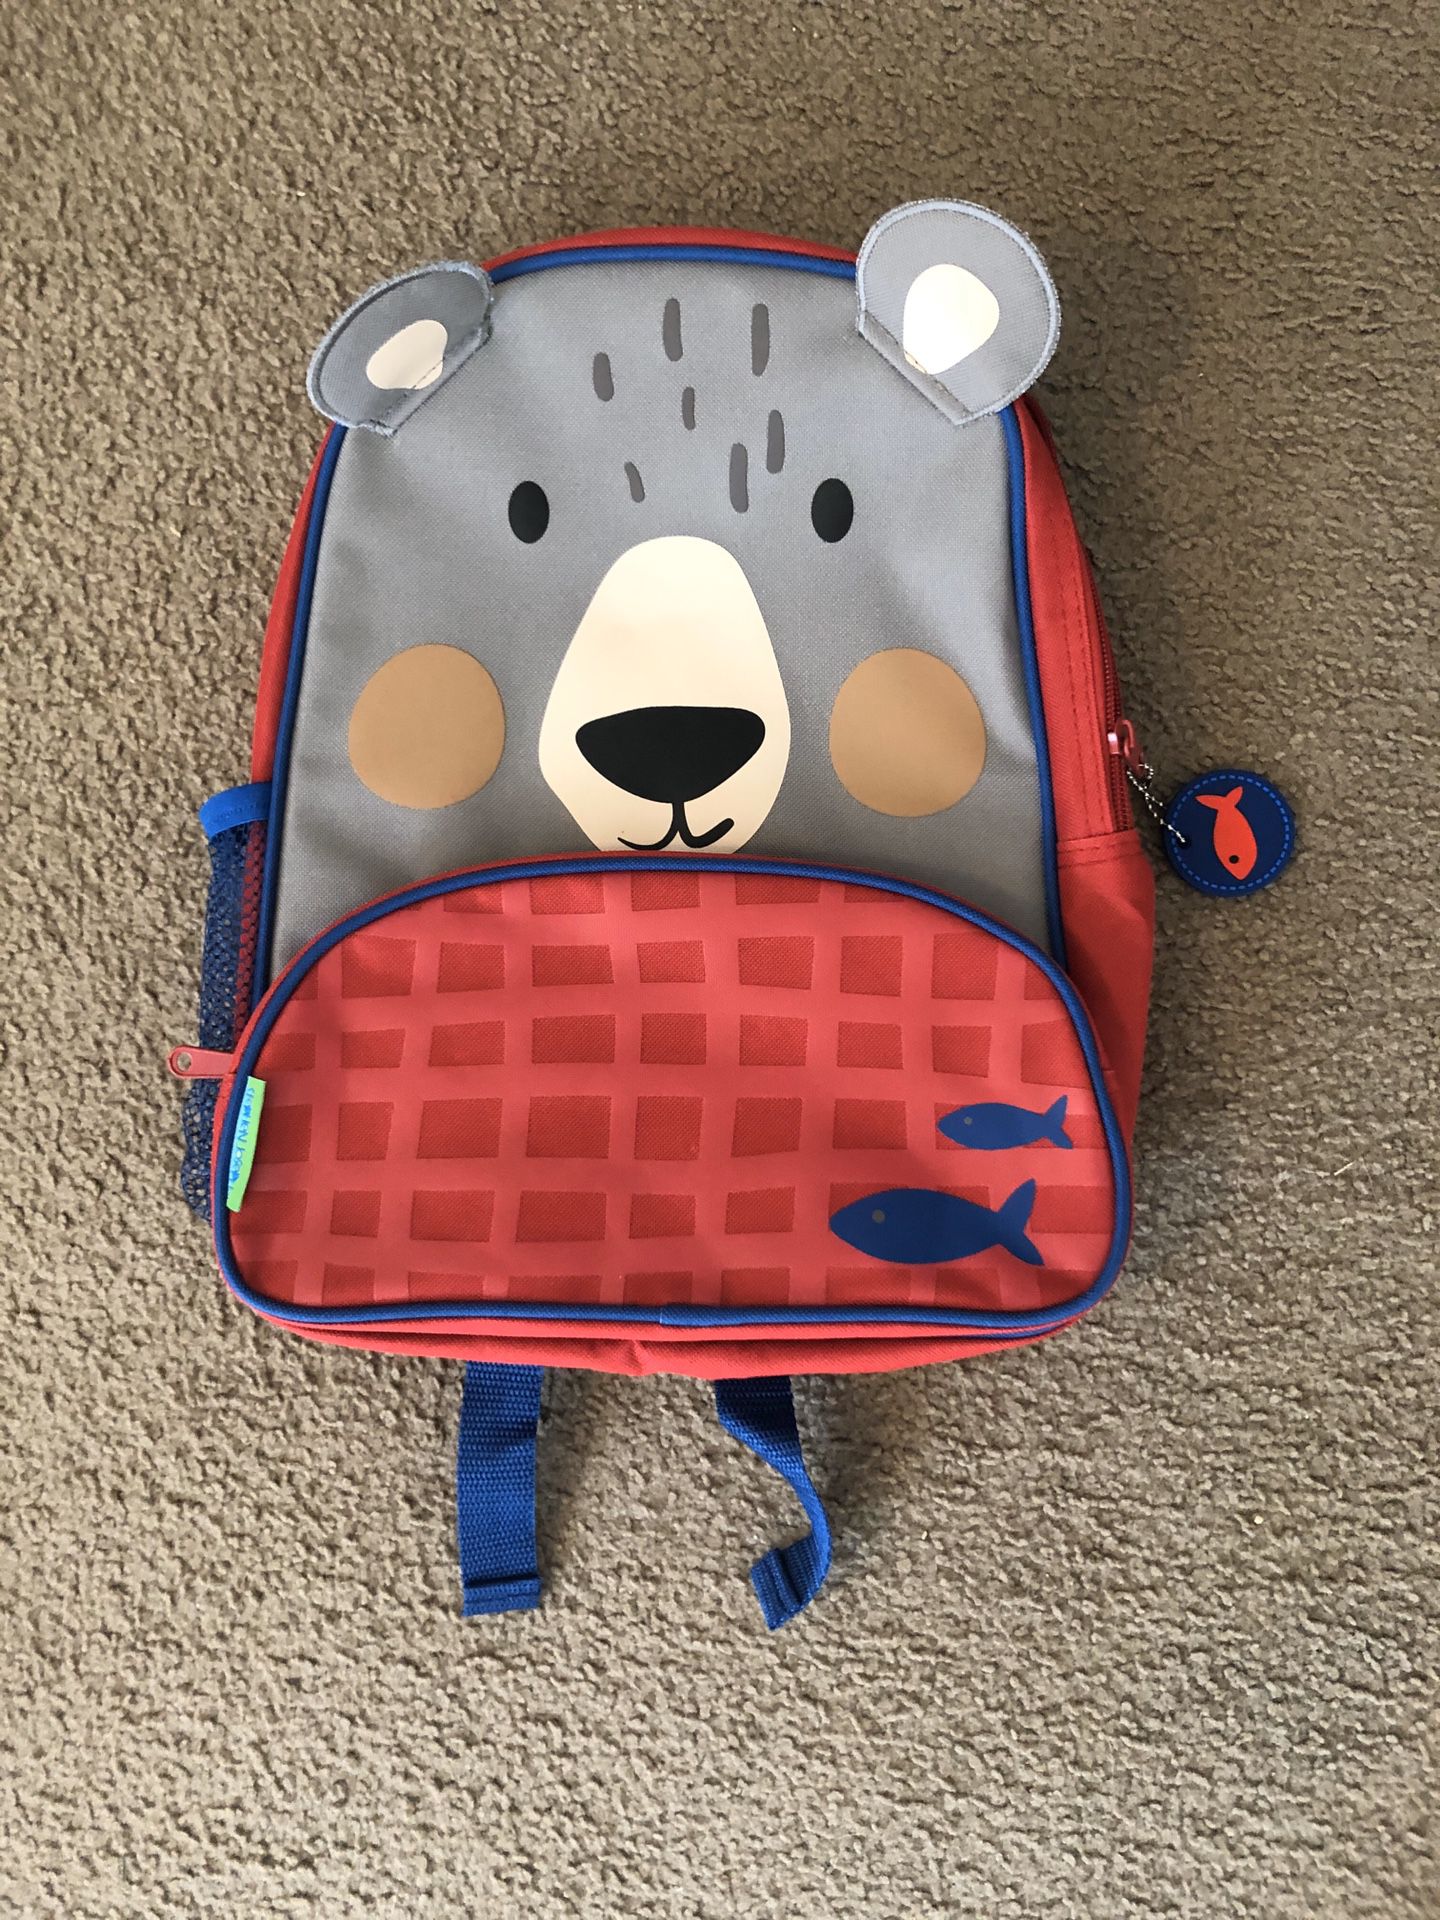 $12 - Brand New - Boys/Kids Sidekick Bear Backpack with Zipper Pull - Stephen Joseph